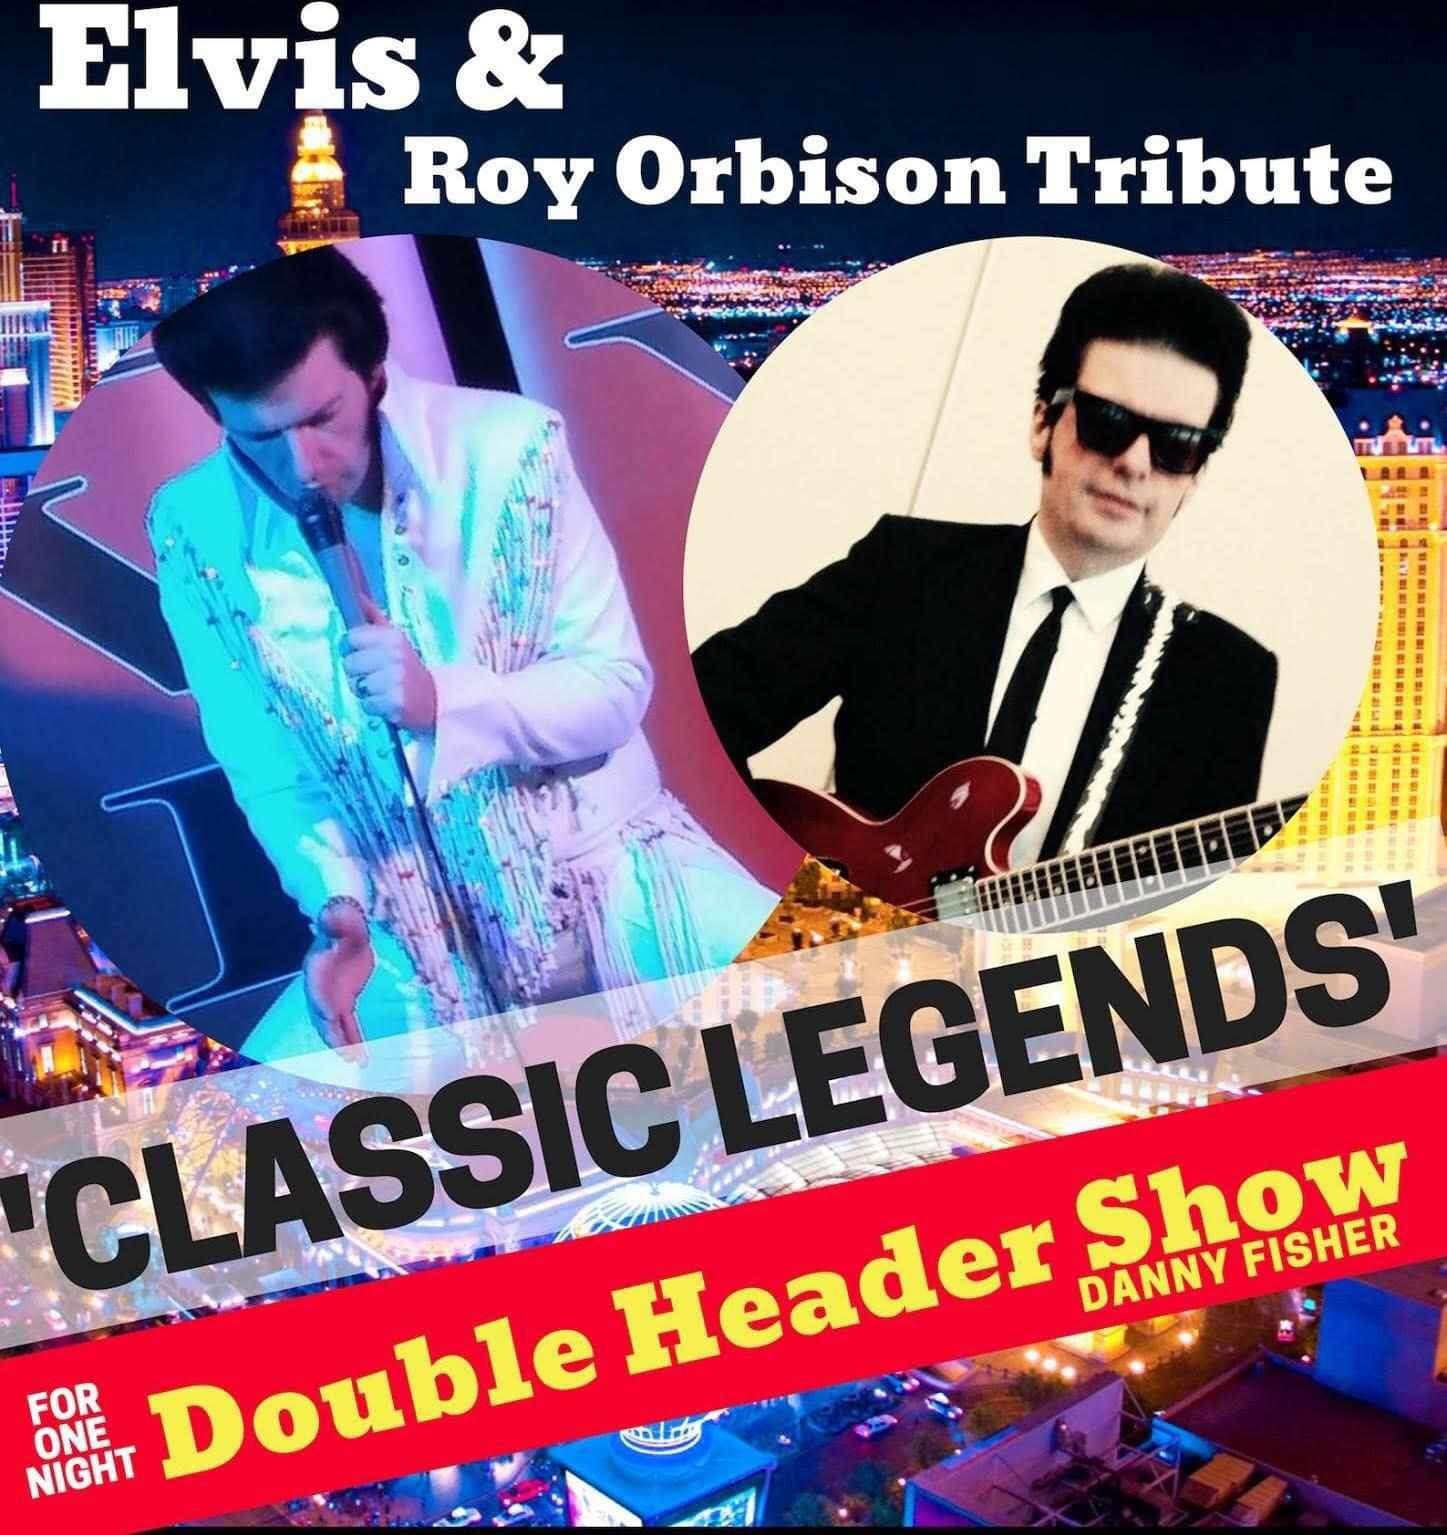 Roy Orbison v’s Elvis Tribute Night  on nov. 18, 19:30@Falcon hotel whittlesey - Achetez des billets et obtenez des informations surwhittlesey music nights 